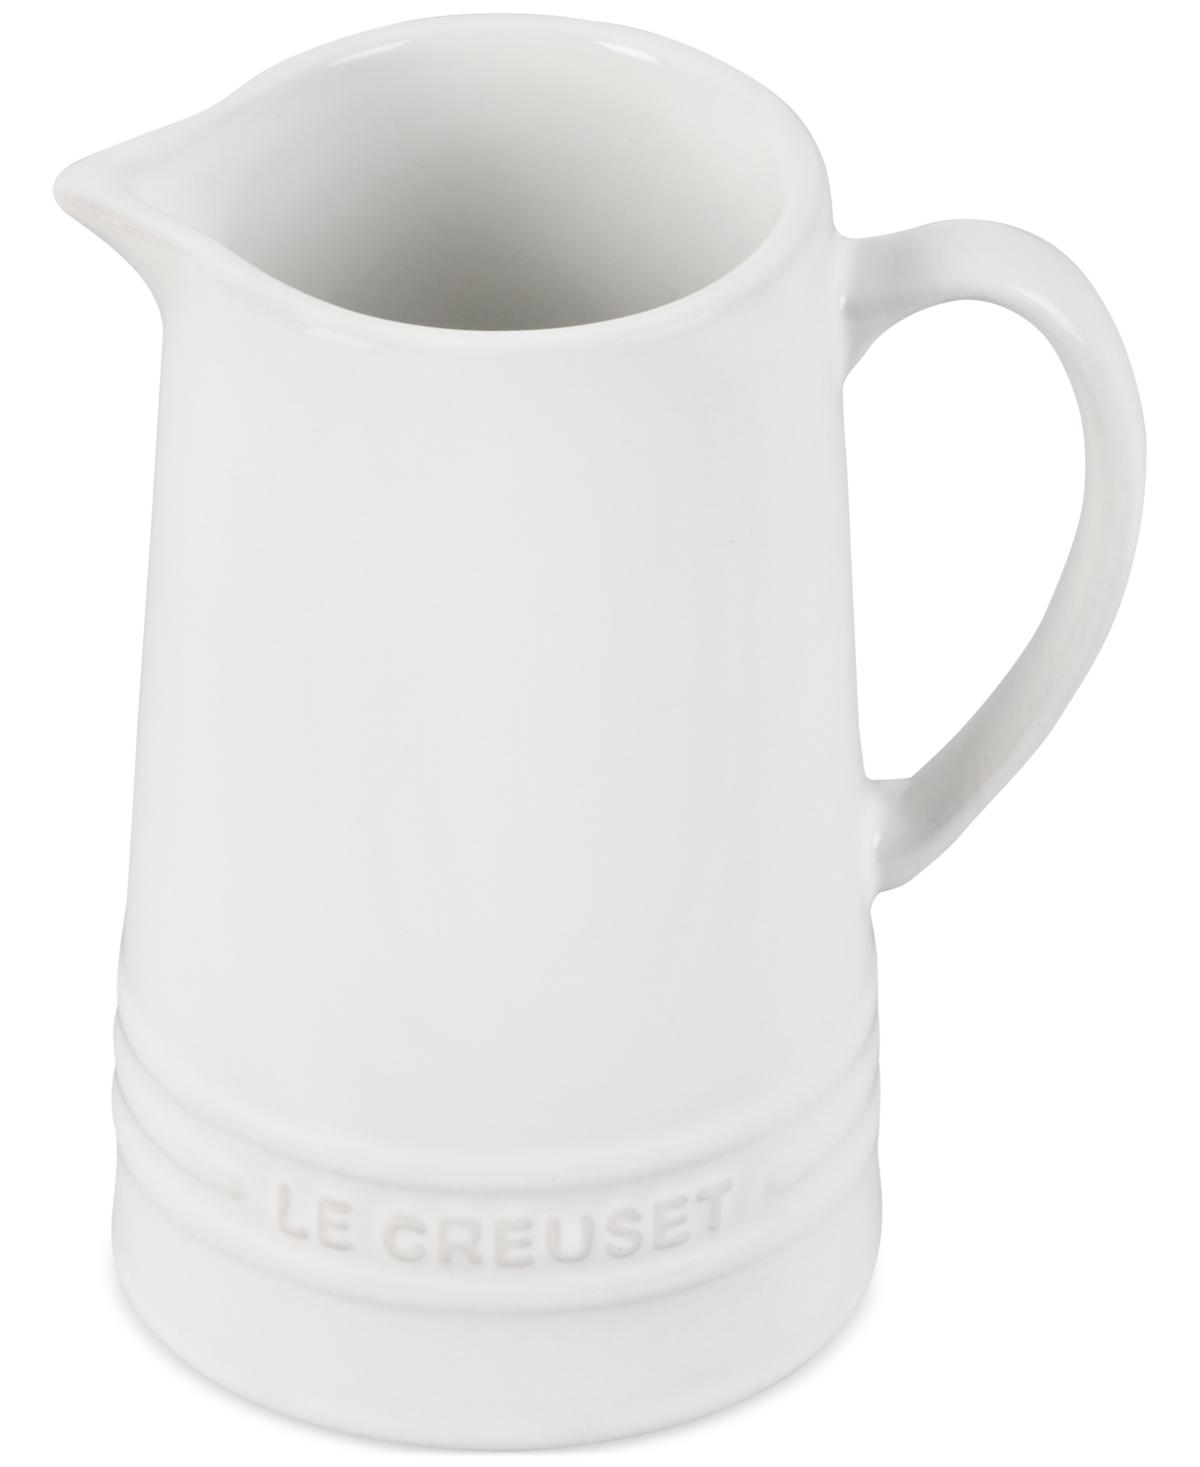 Le Creuset Stoneware 10-oz. Small Scandinavia Pitcher In White